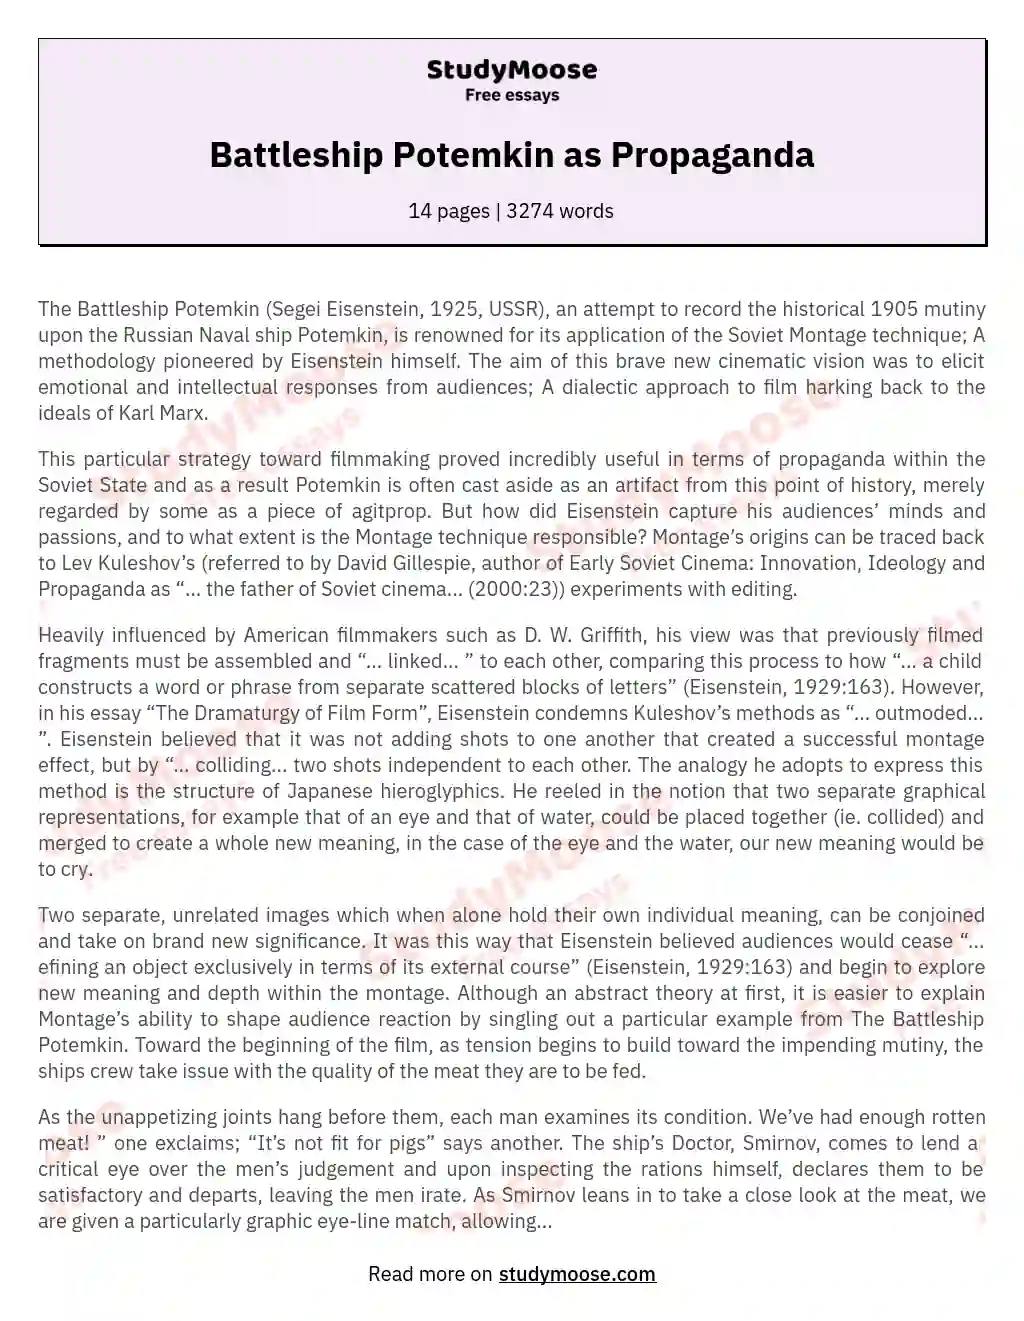 Battleship Potemkin as Propaganda essay